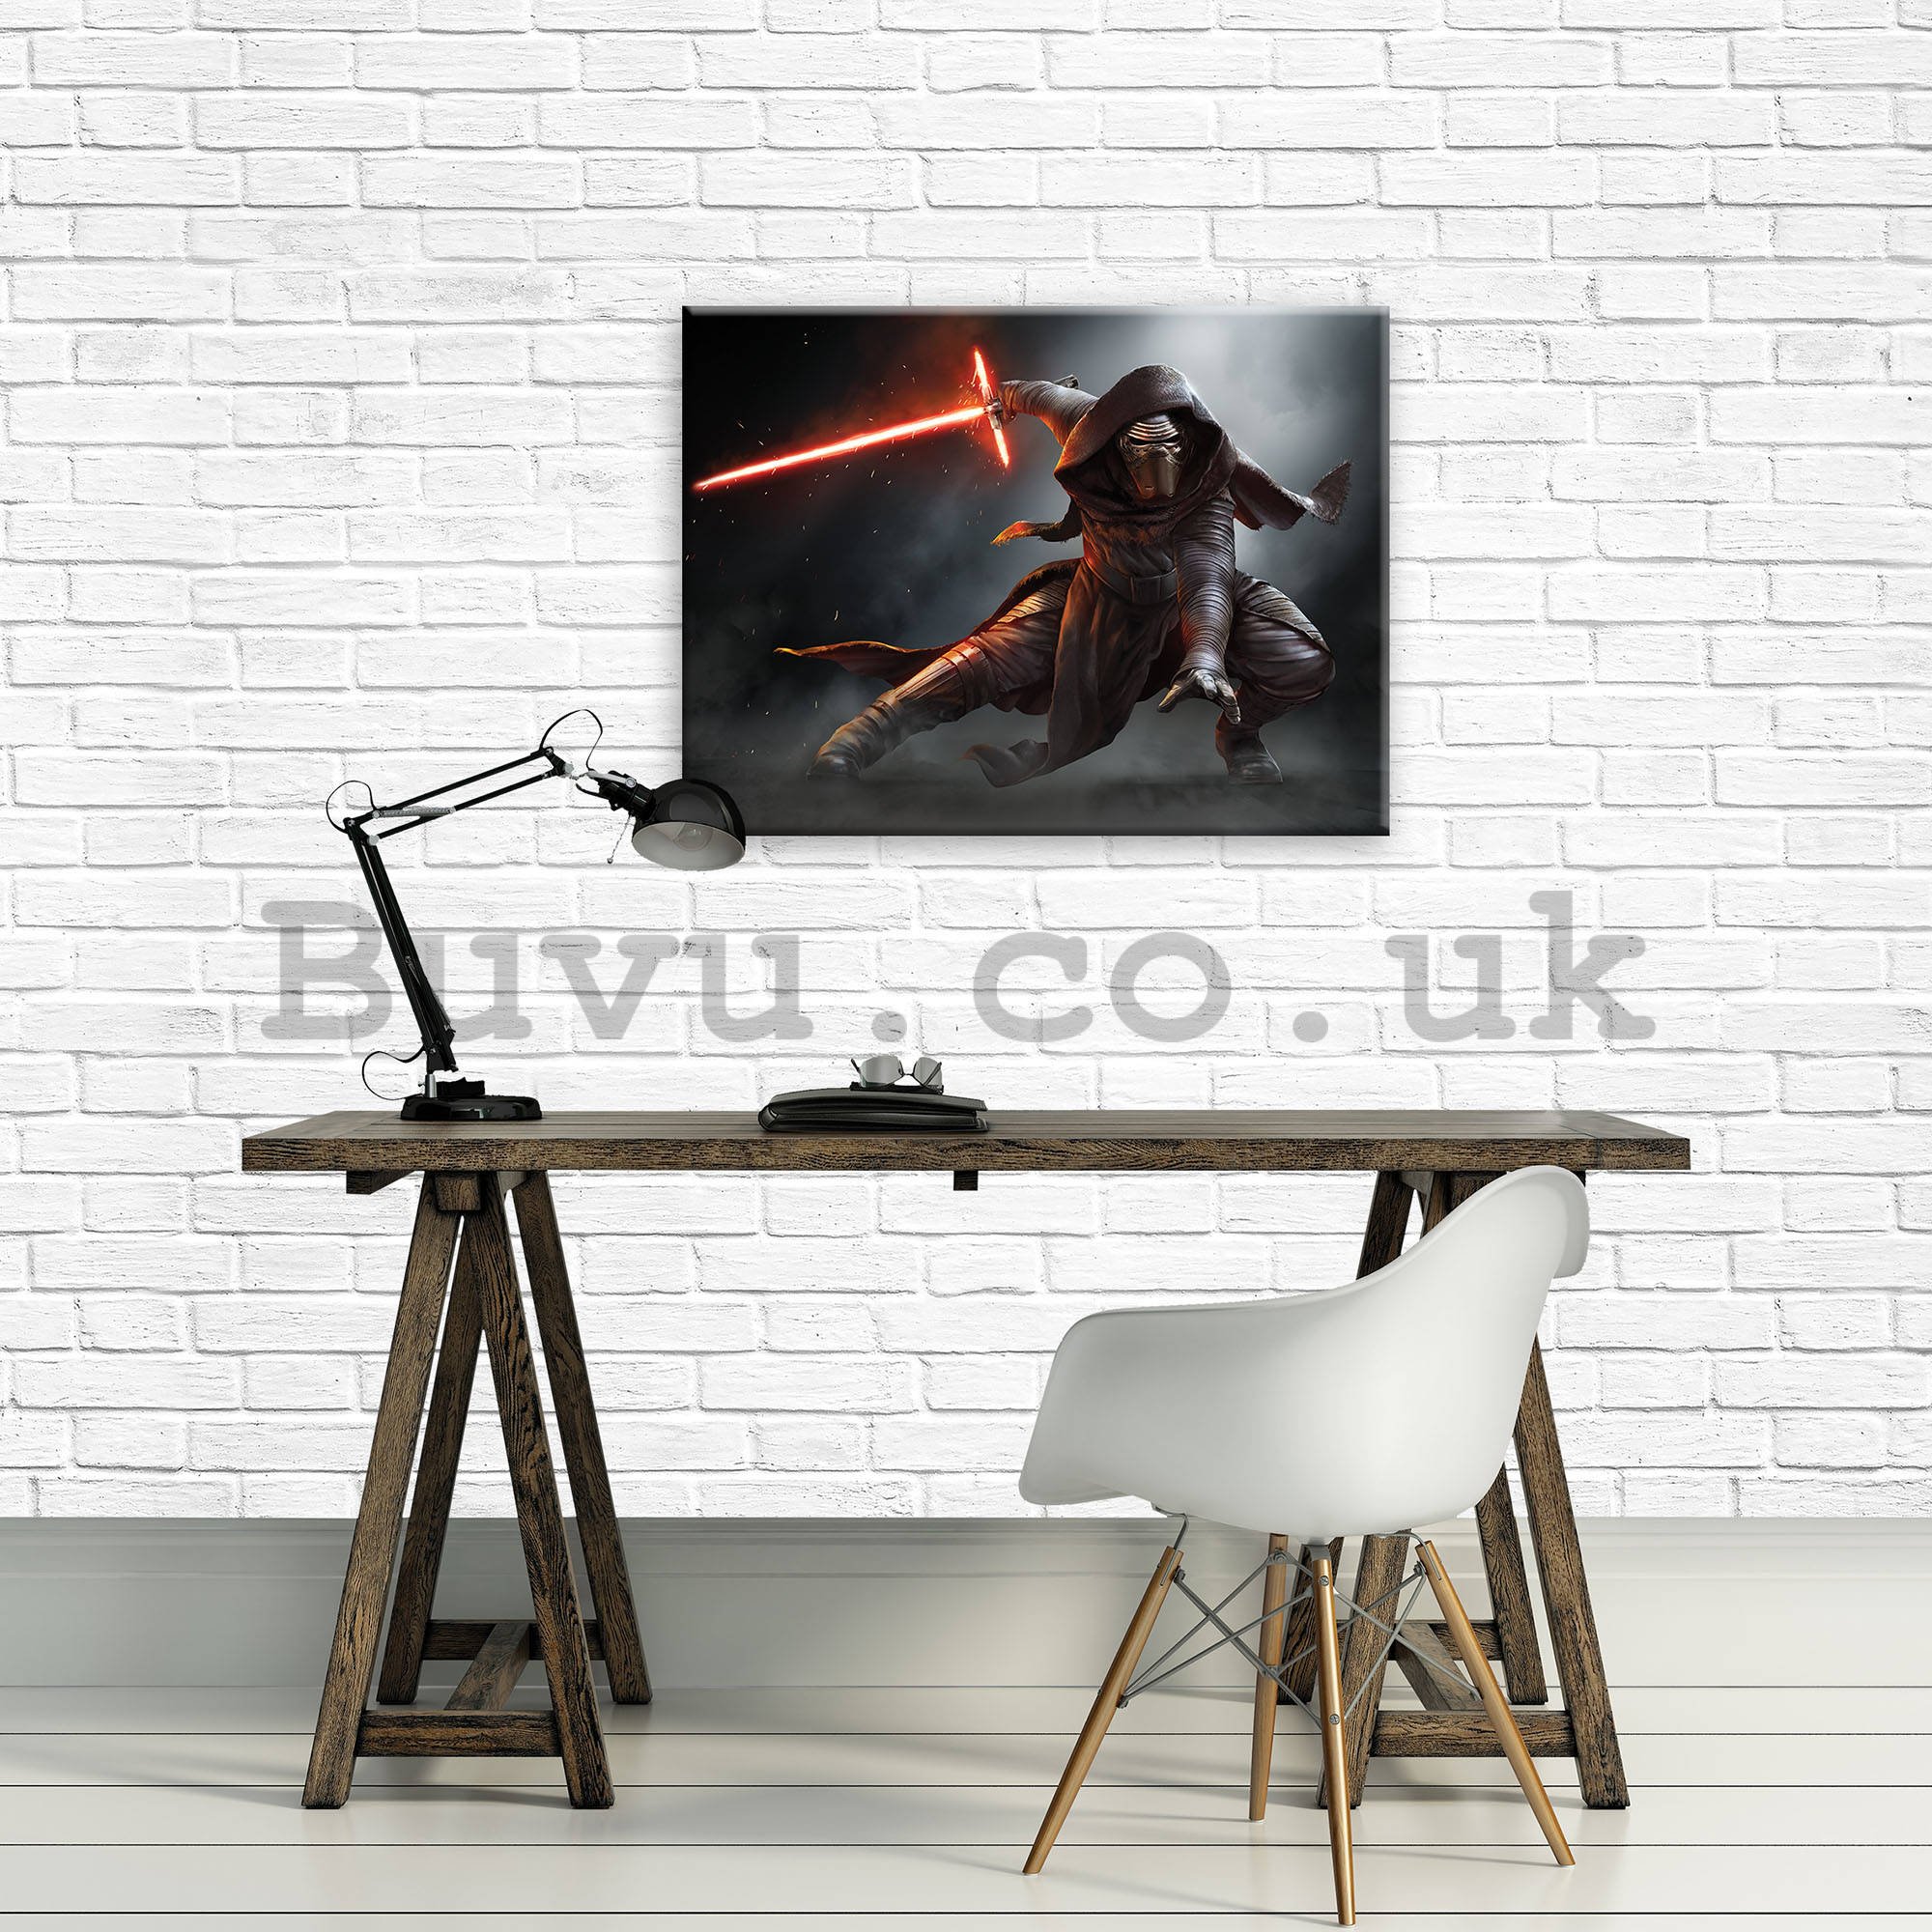 Painting on canvas: Star Wars, Kylo Ren - 80x60 cm